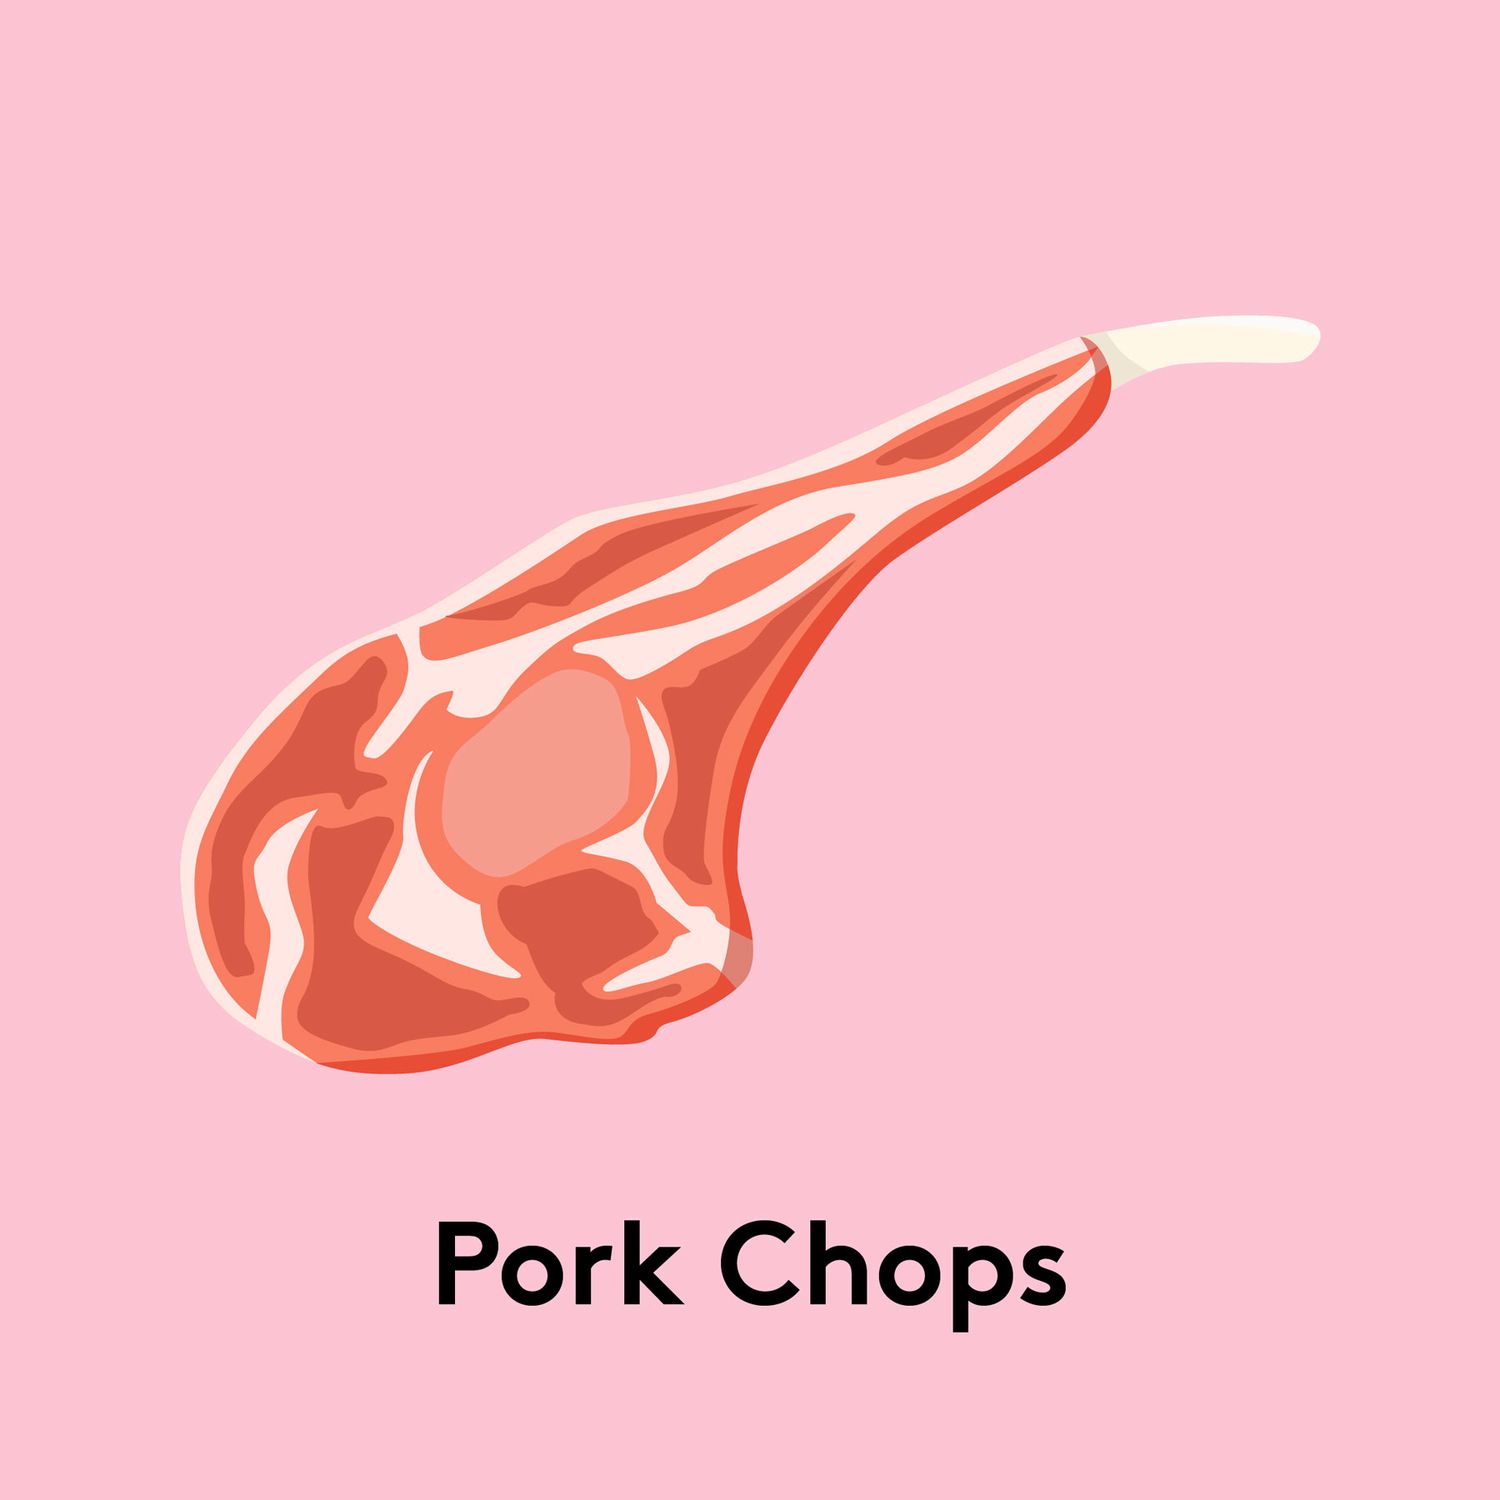 Types of pork cuts - pork chops